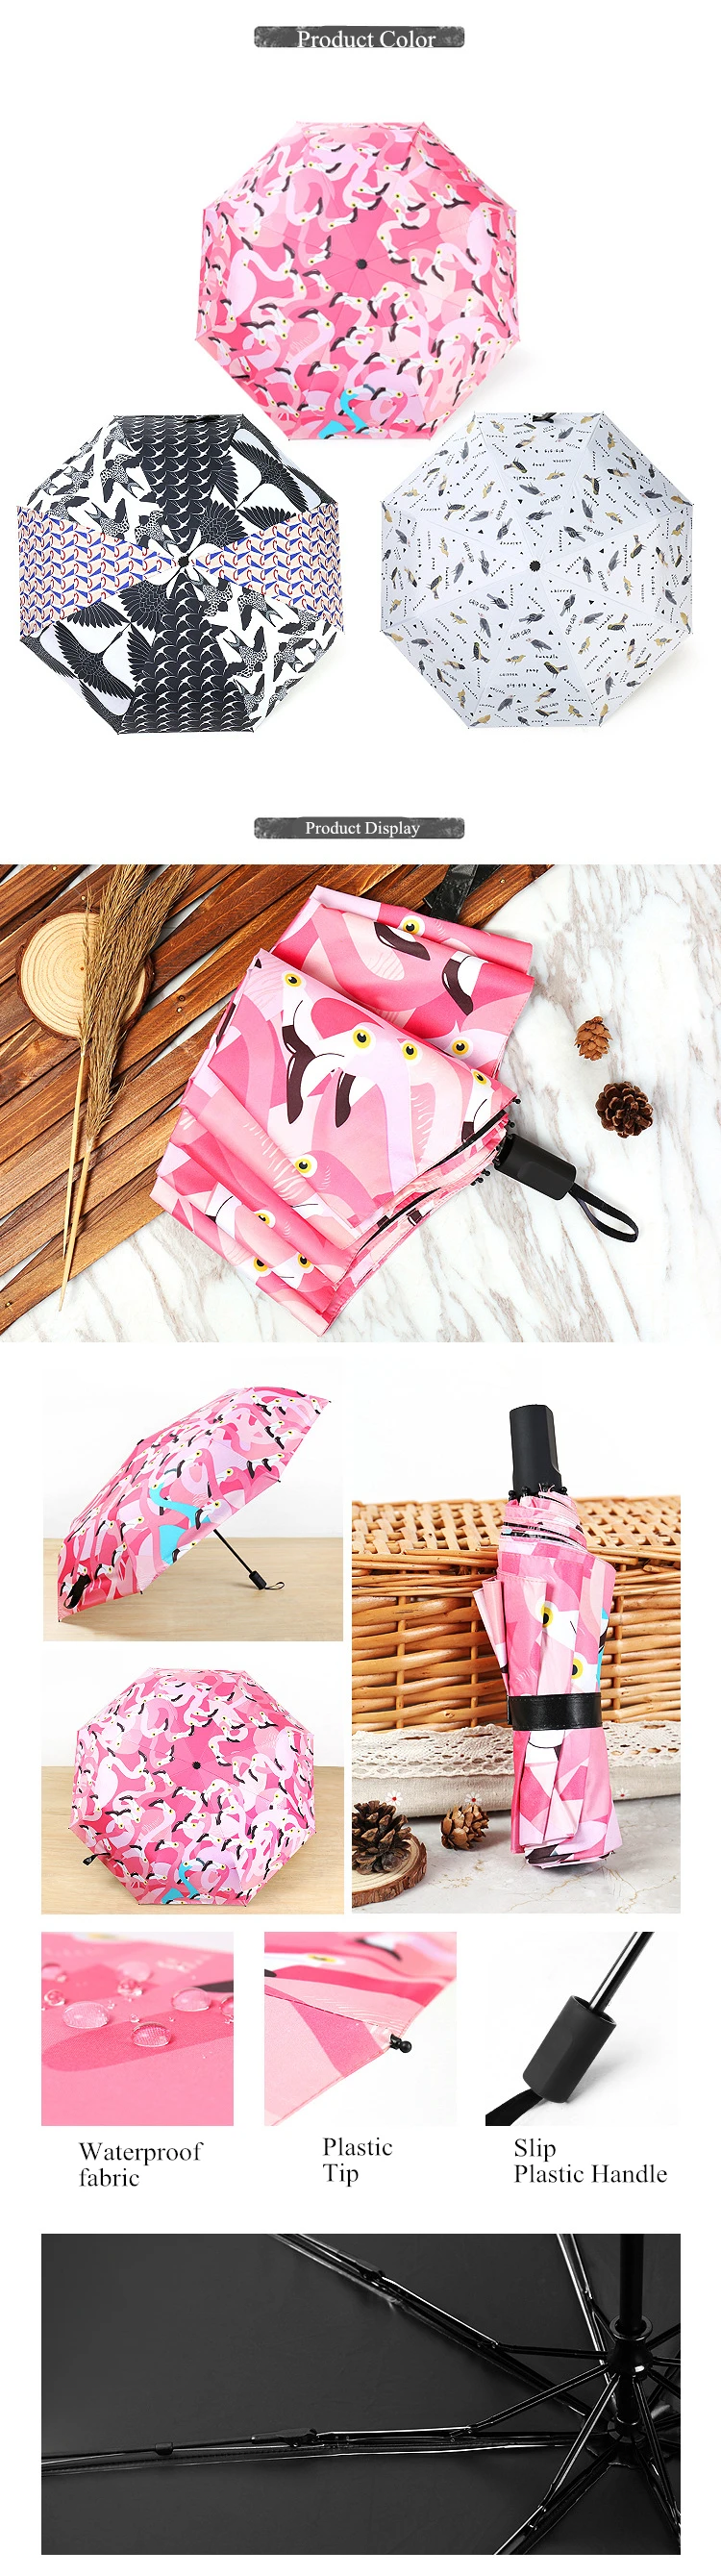 flamingo umbrella.jpg